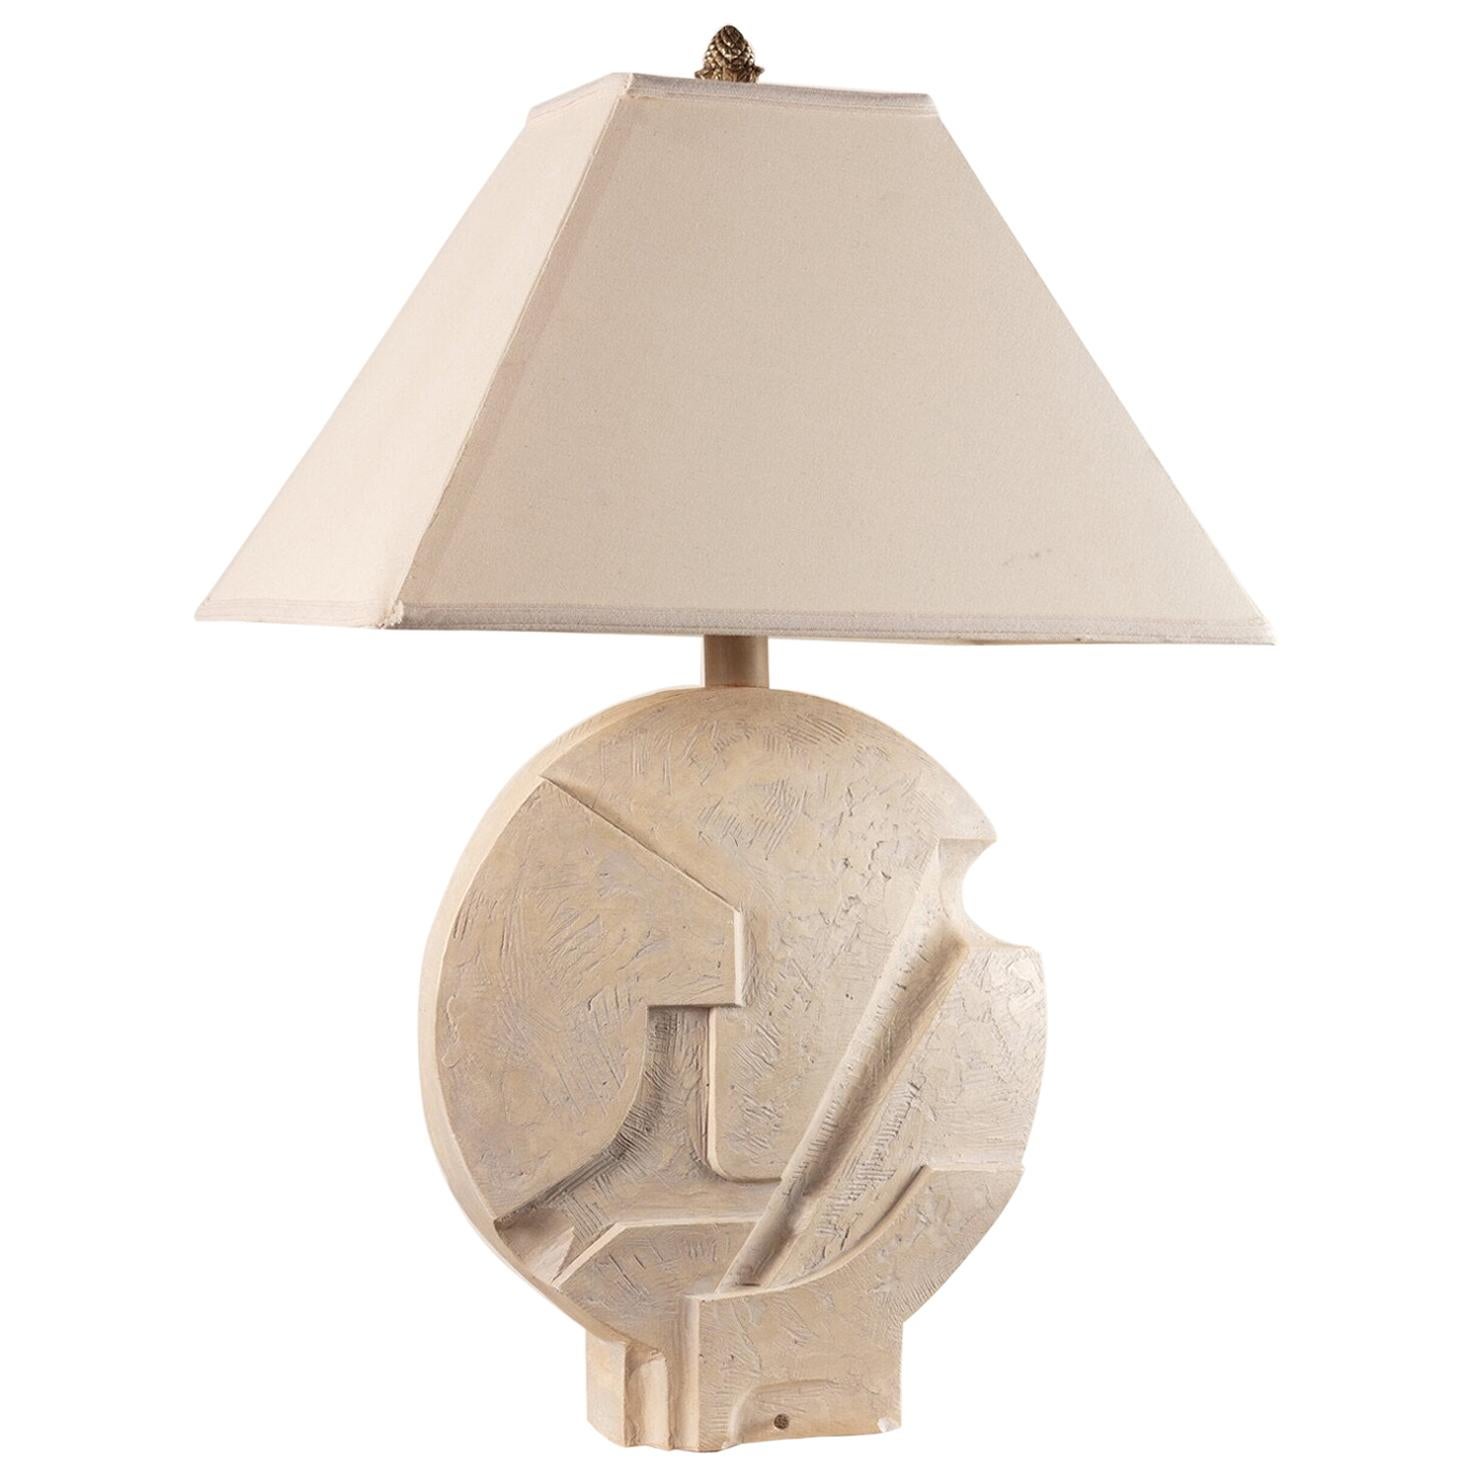 Vintage Architectural Plaster Lamp For, Vintage Plaster Table Lamps